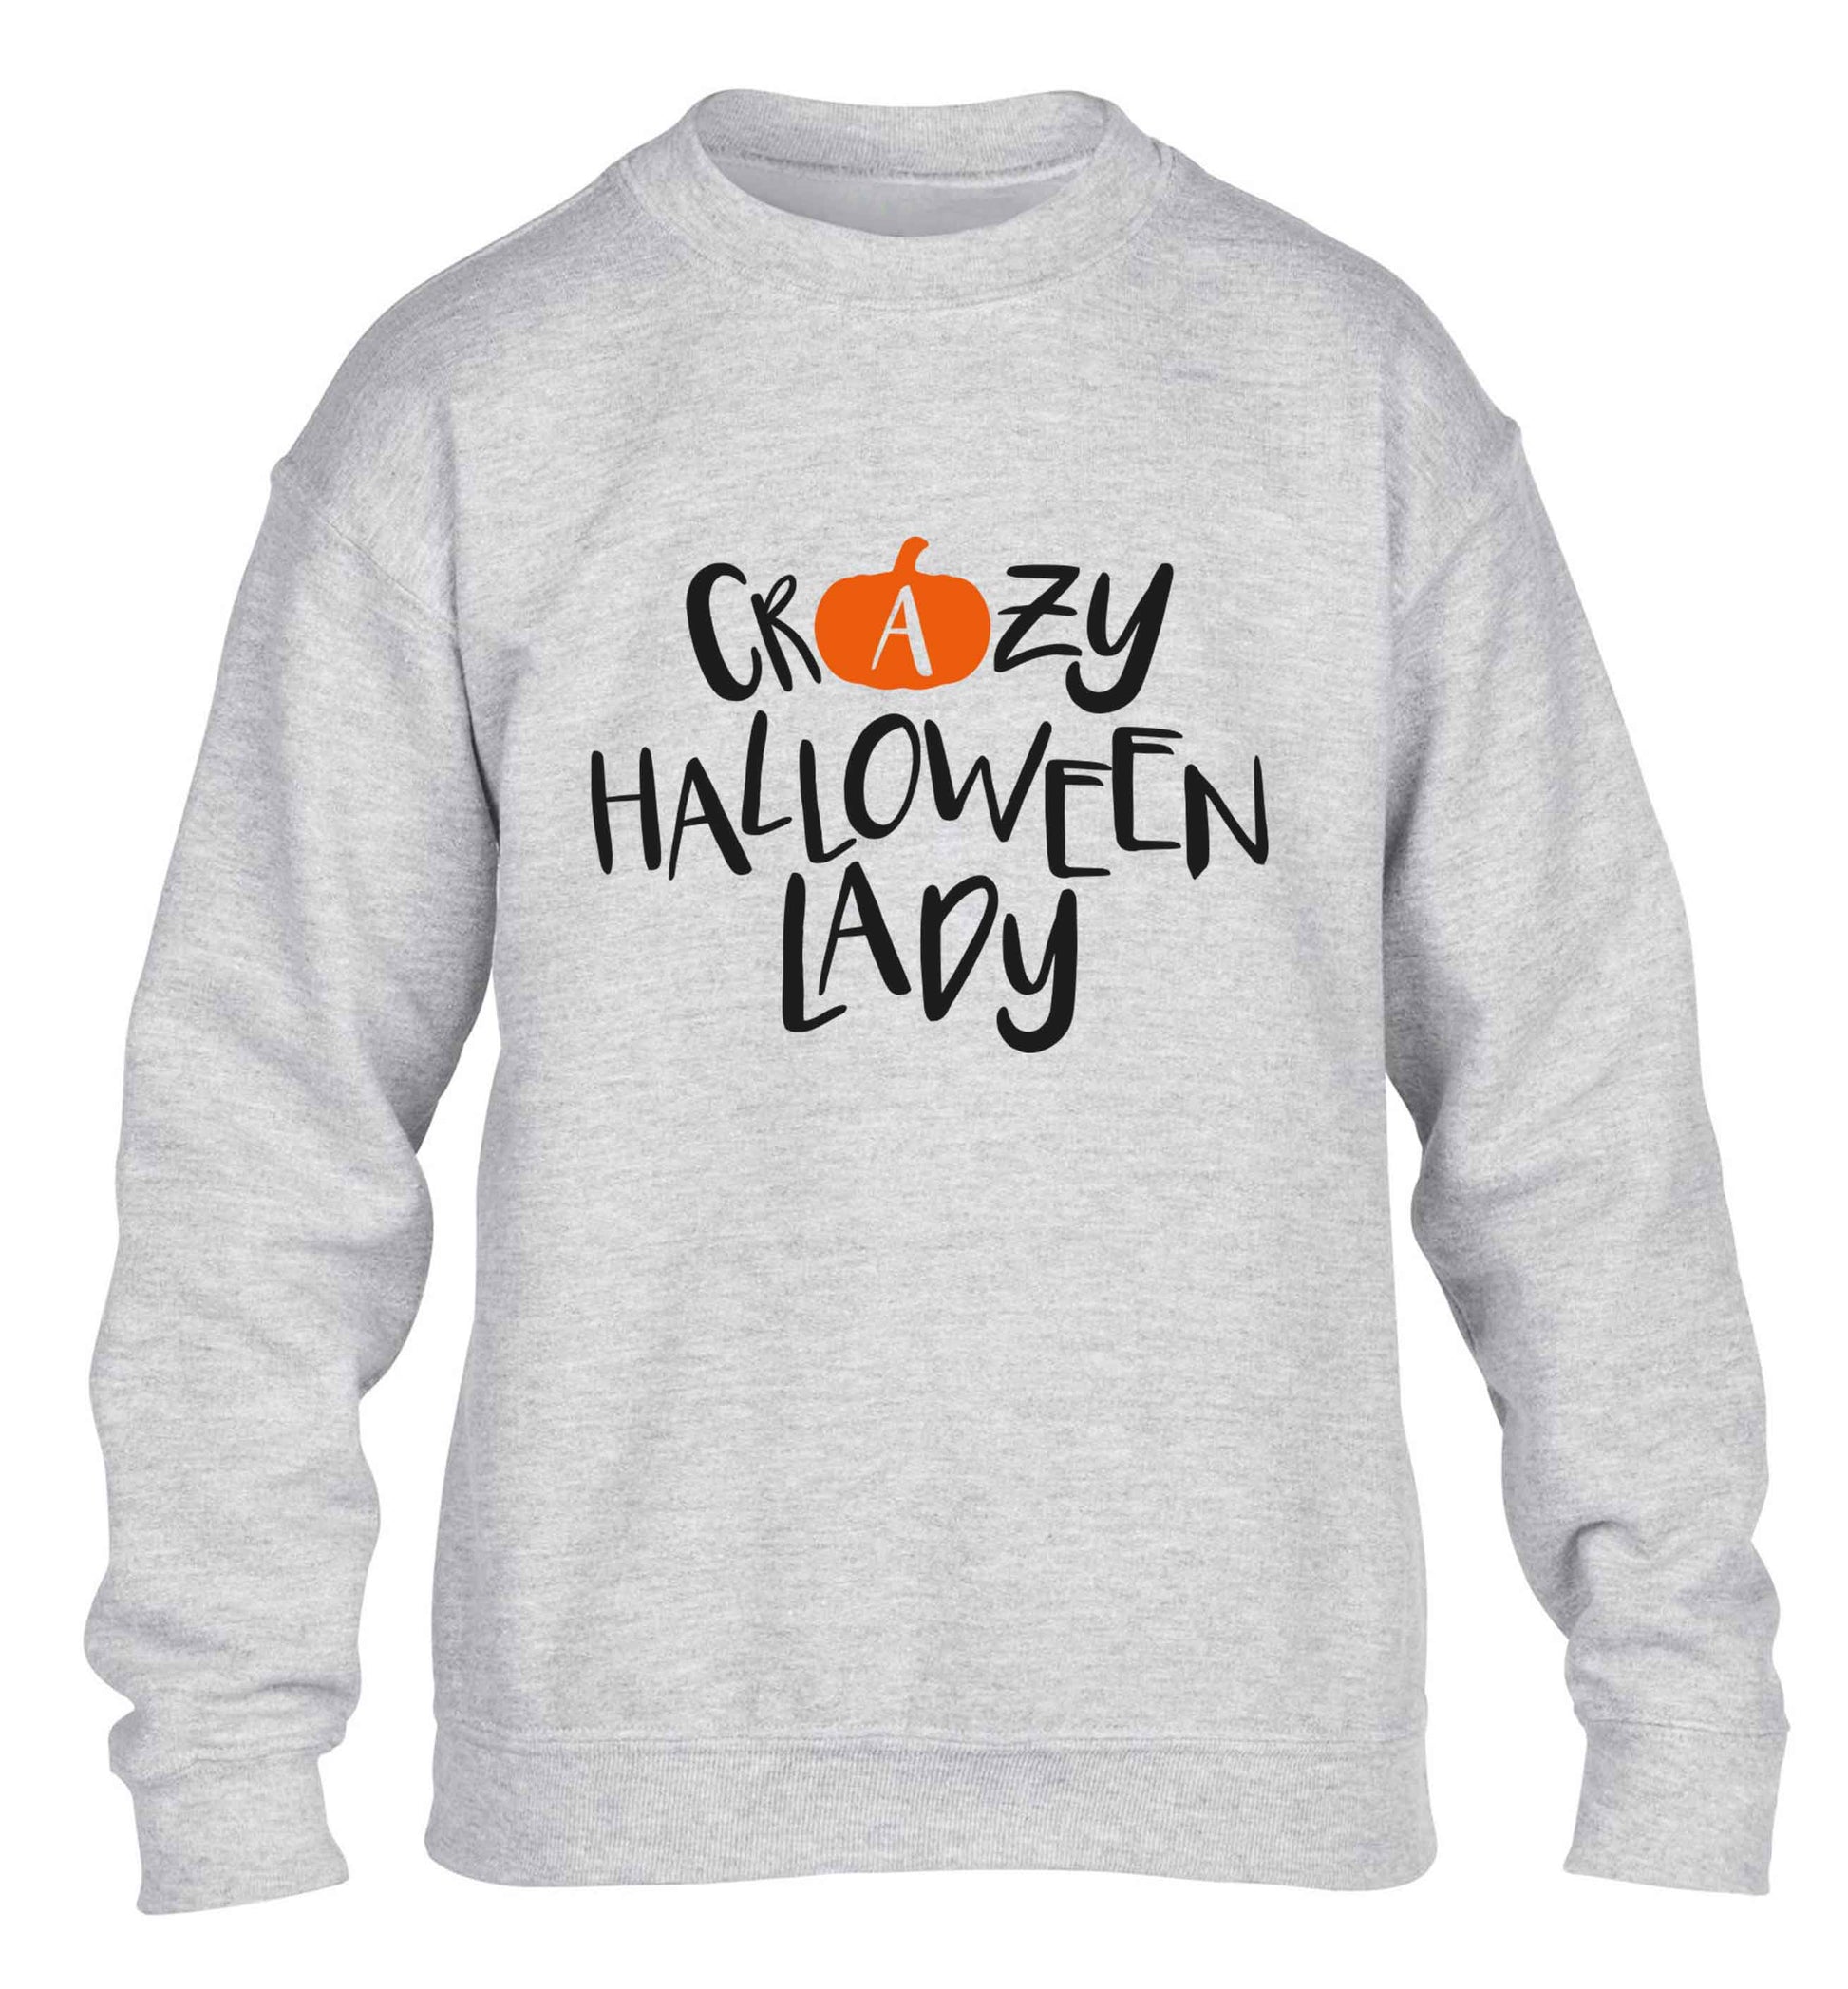 Crazy halloween lady children's grey sweater 12-13 Years